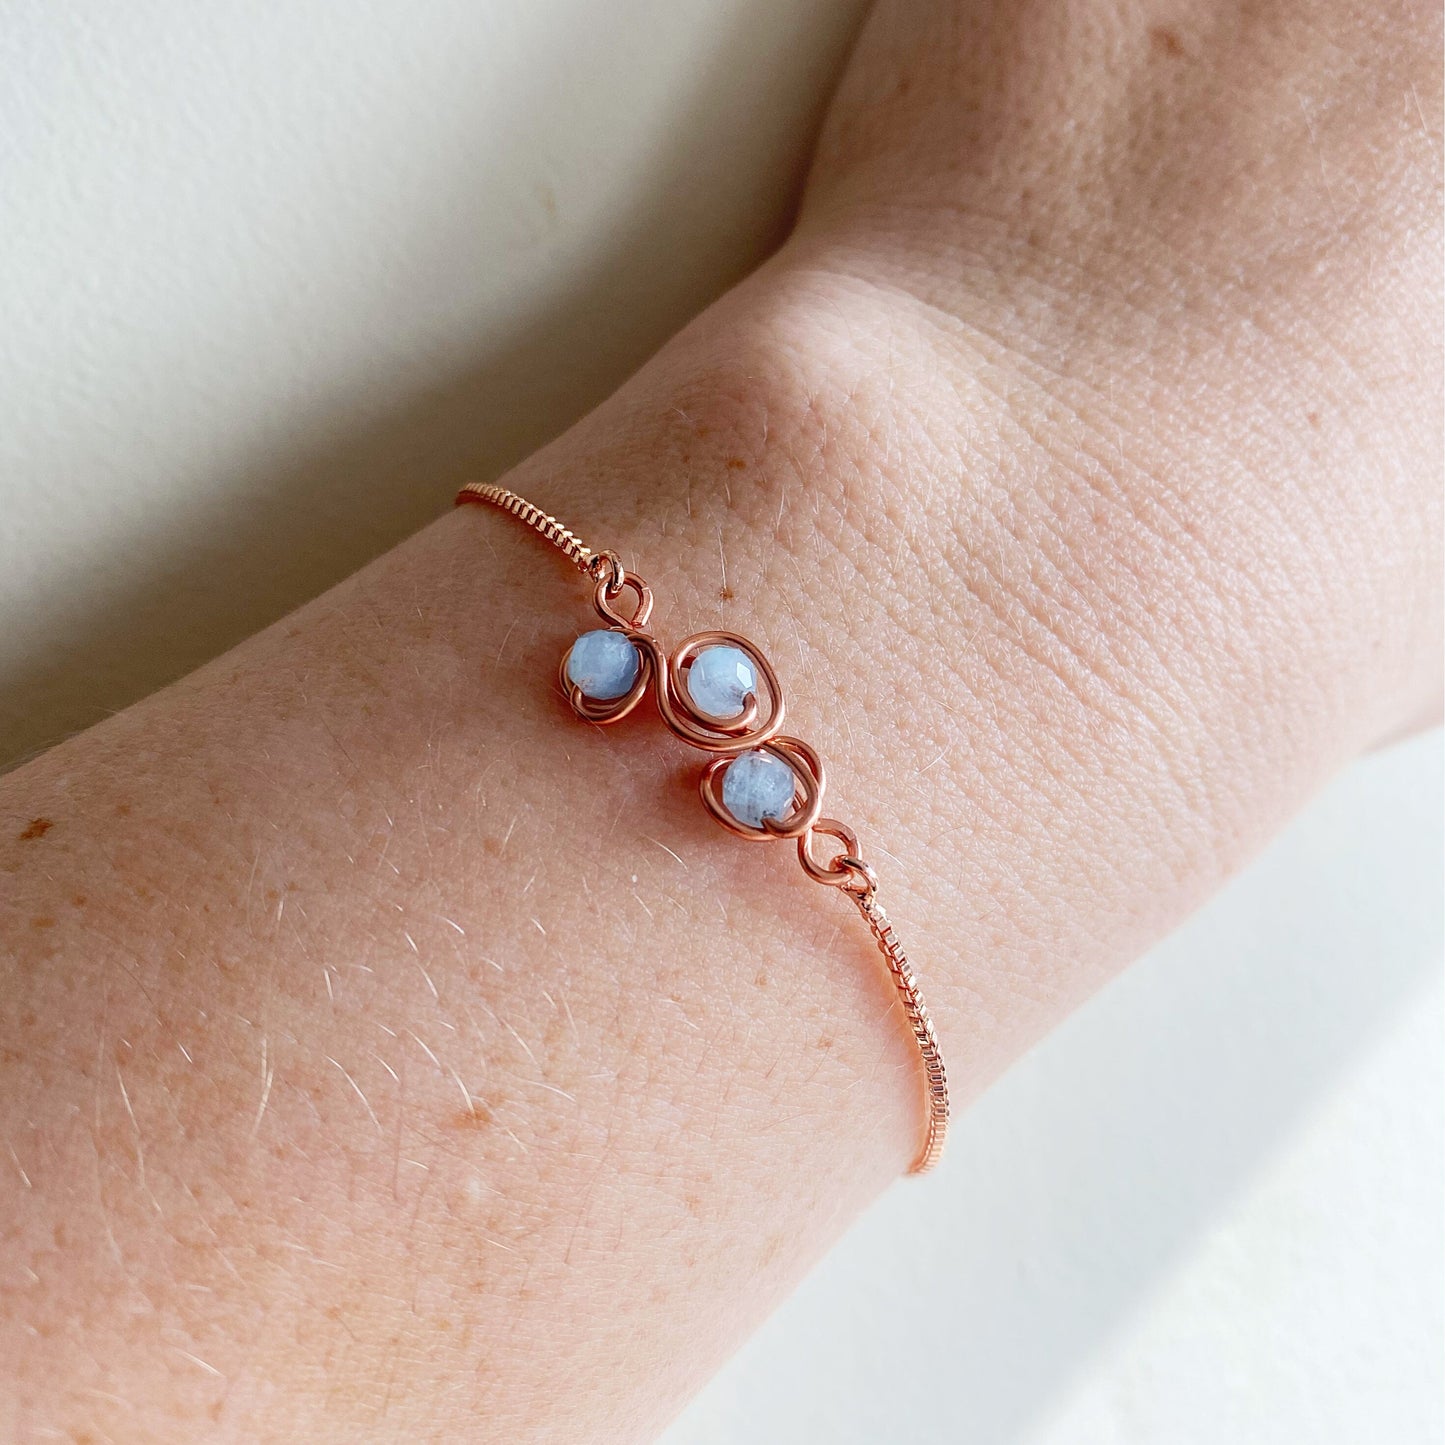 Aquamarine and copper adjustable bracelet